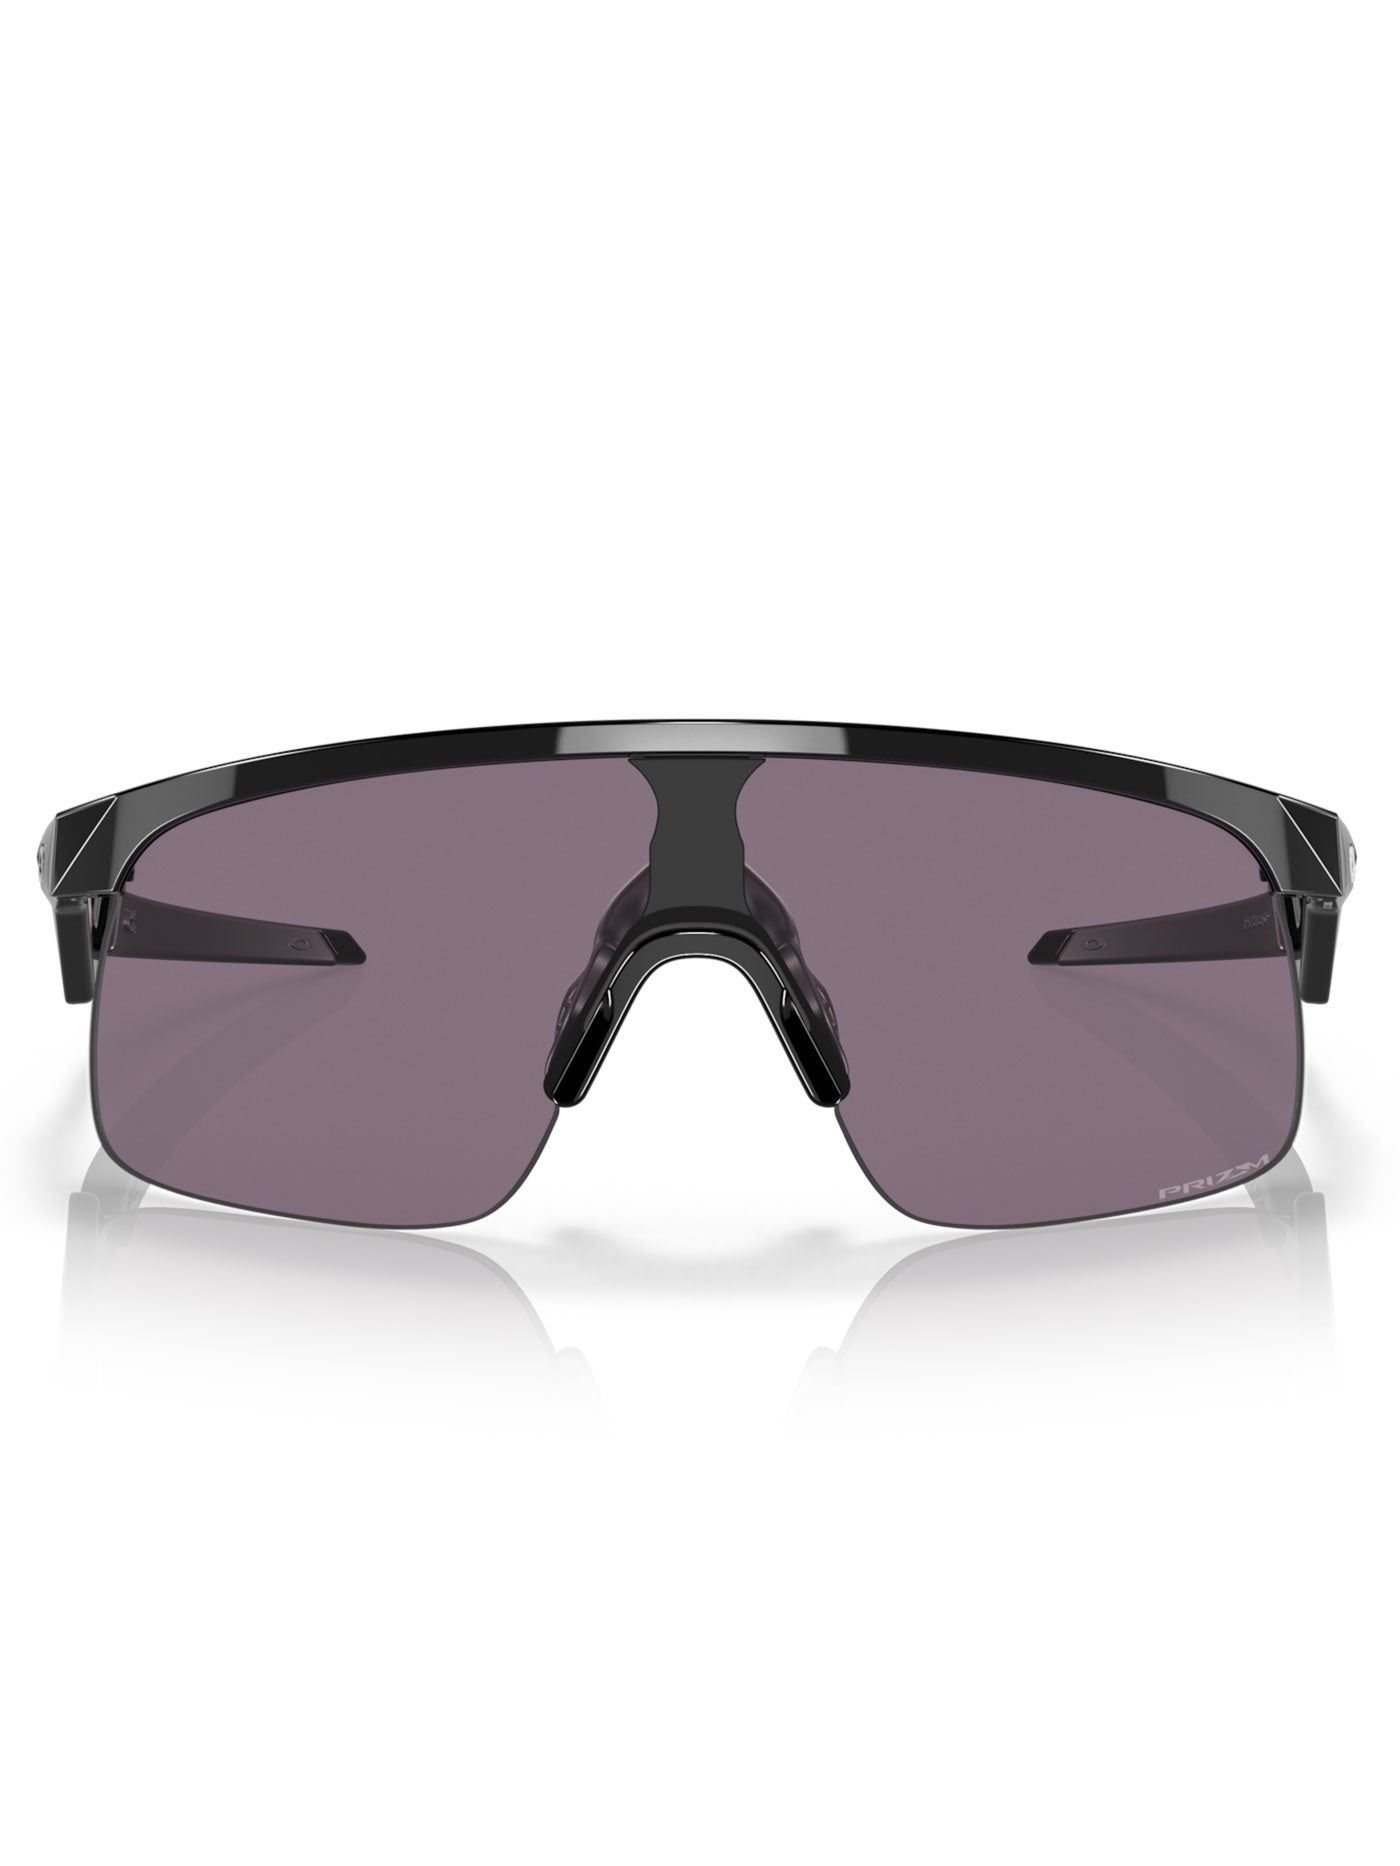 Oakley Resistor Polished Black/Prizm Grey Sunglasses